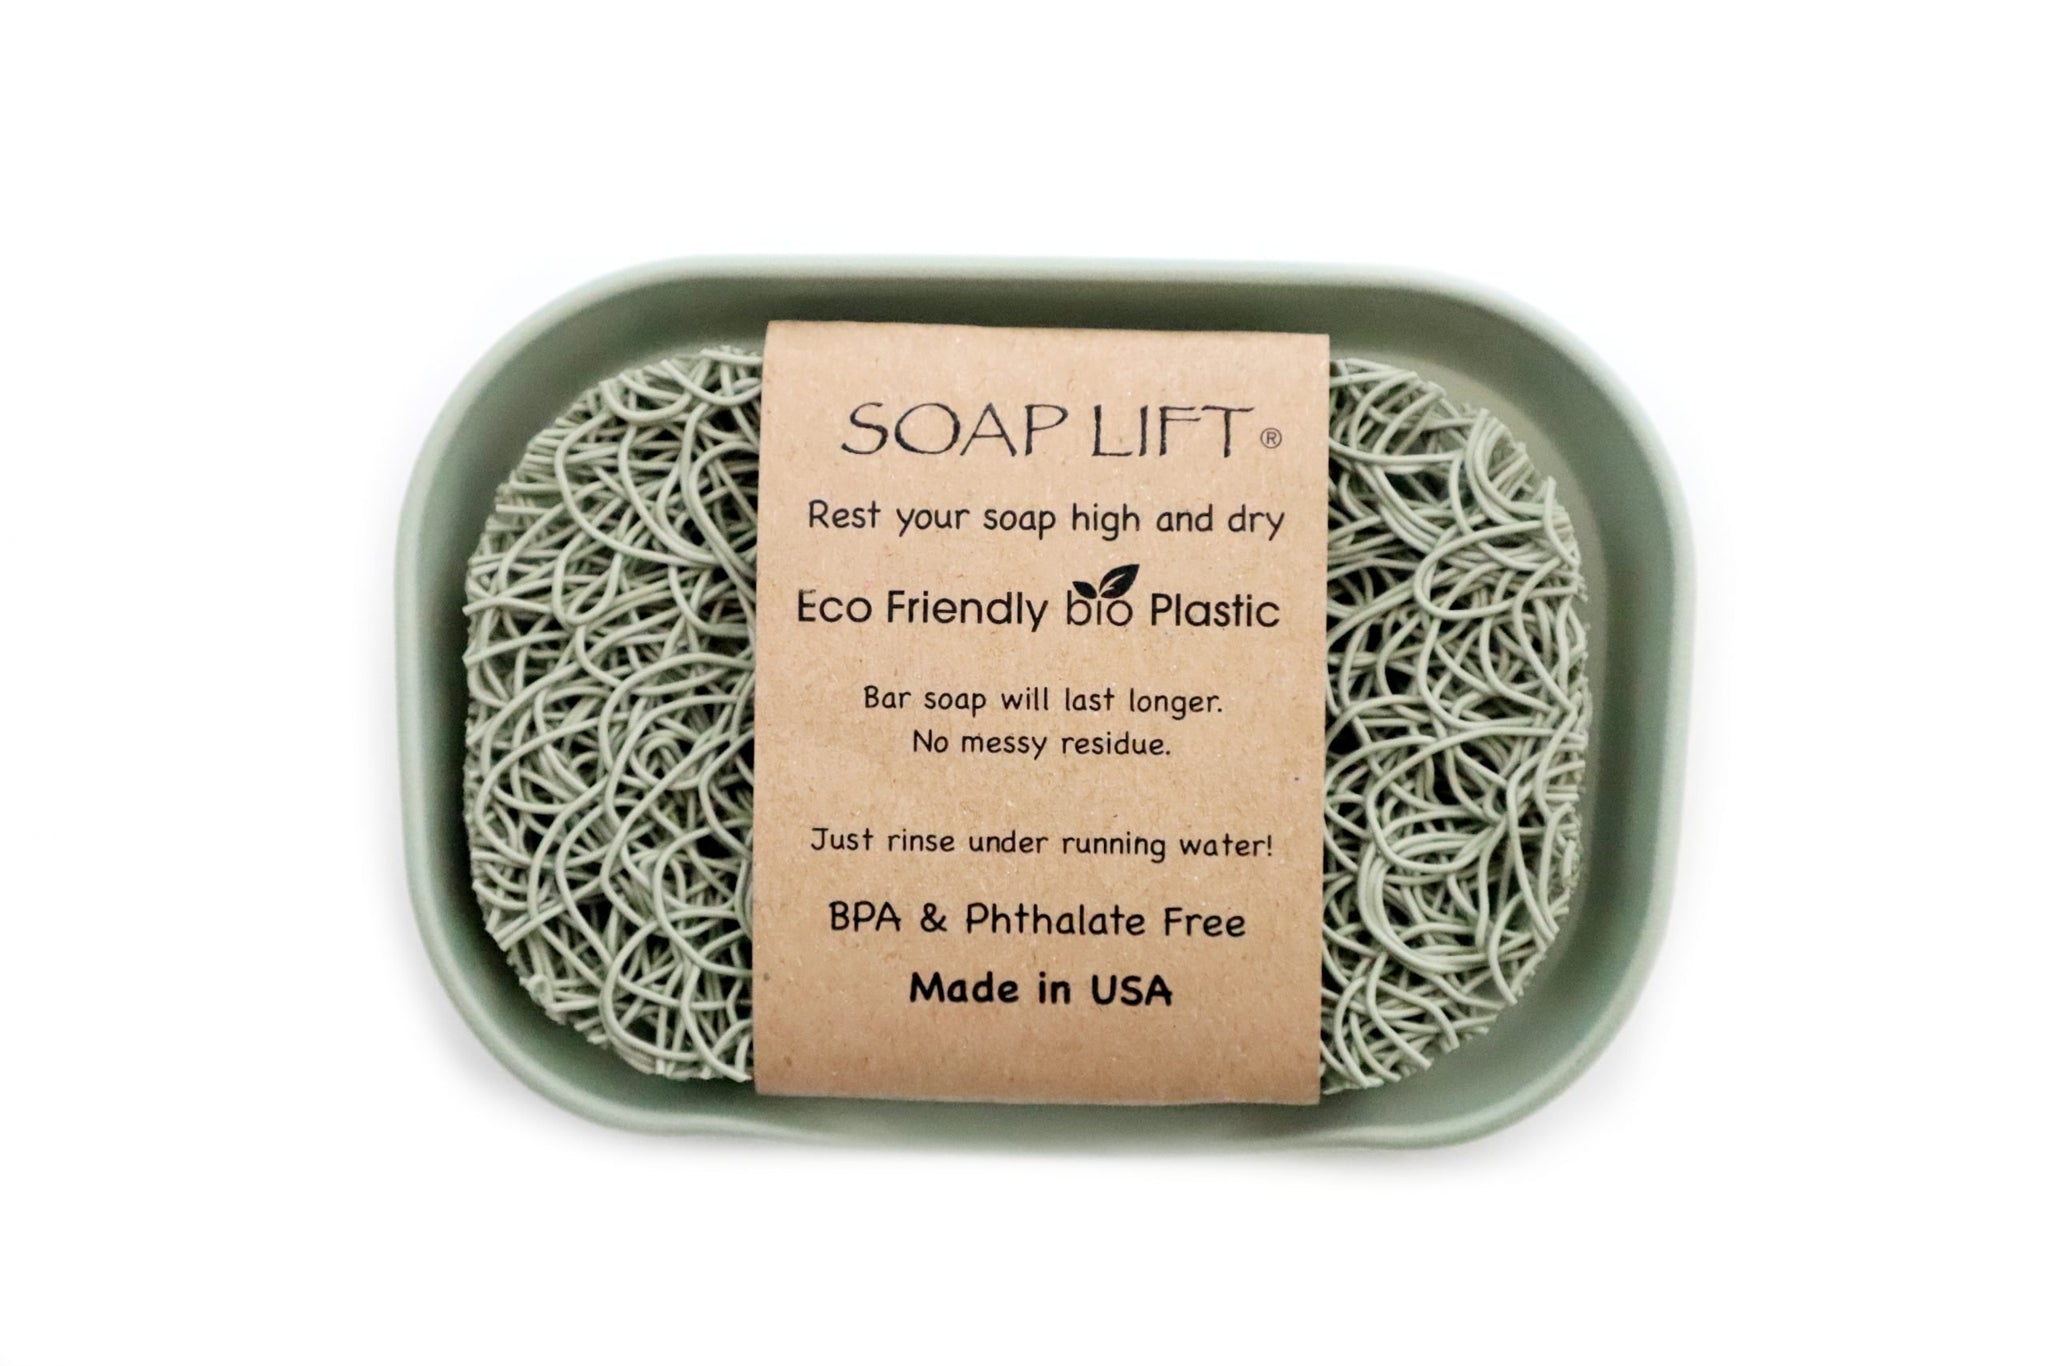 Sustainable Kitchen Bundle: Solid Dish Soap, Waterfall Soap Dish, Sisa